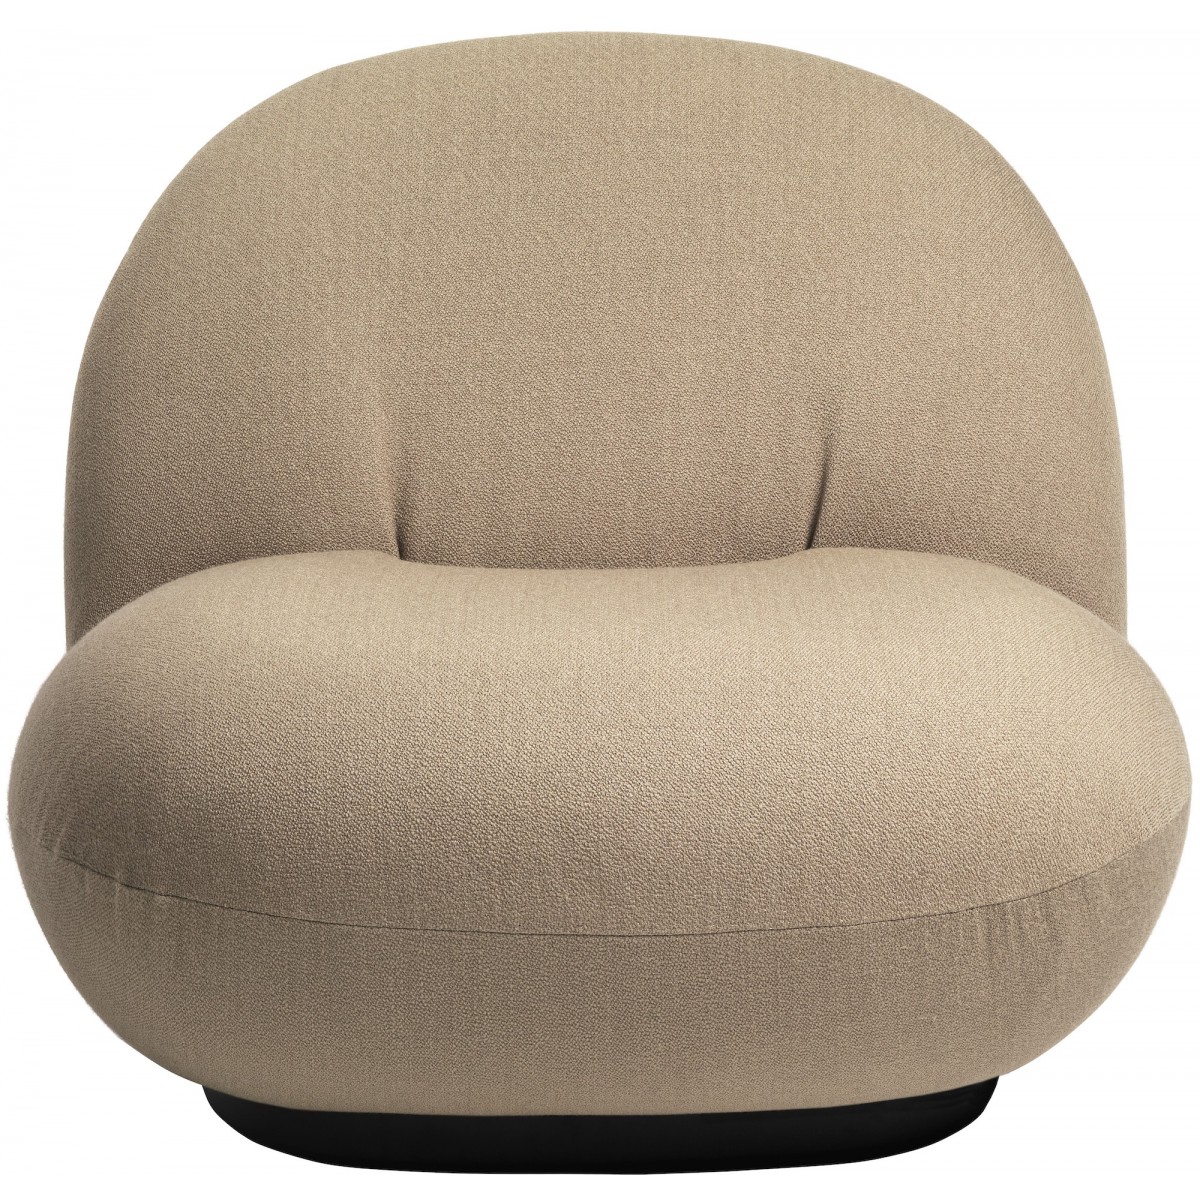 Vidar 333, black fixed base – Pacha lounge chair